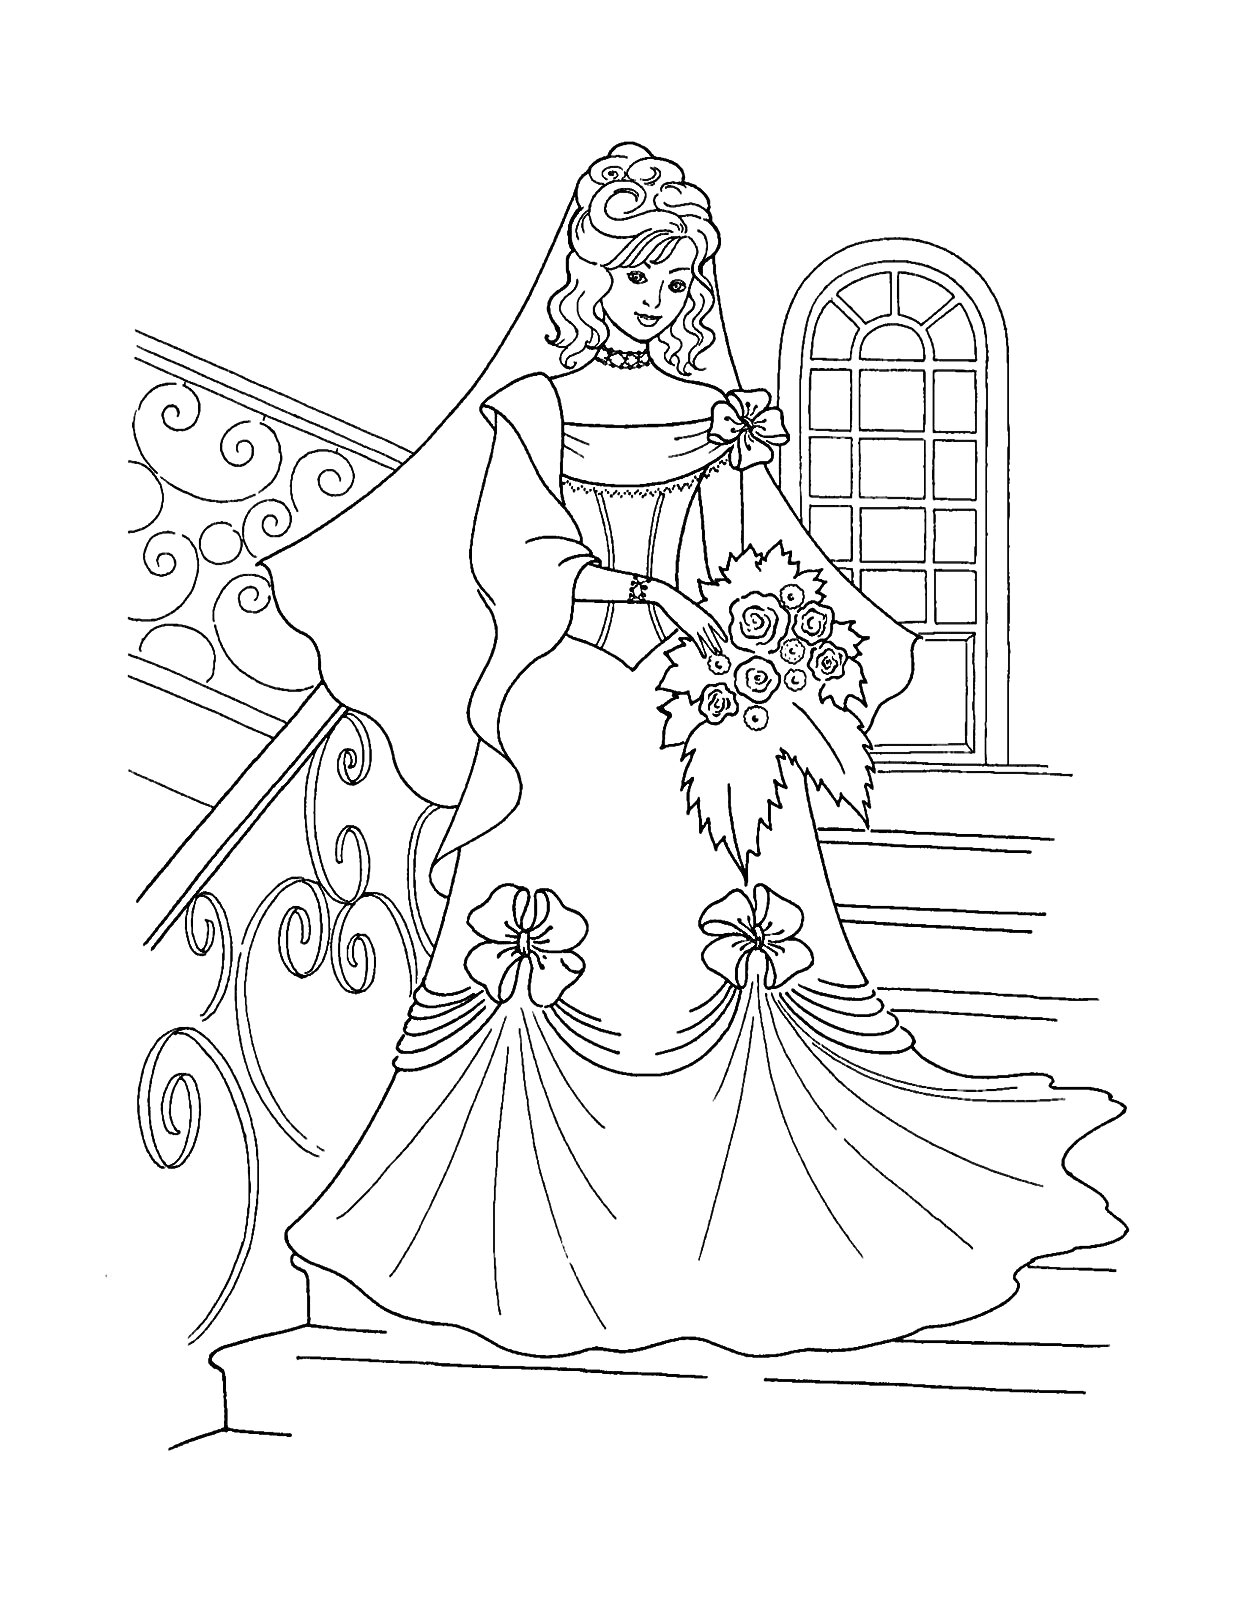 Раскраска Невеста на лестнице с букетом цветов возле окна